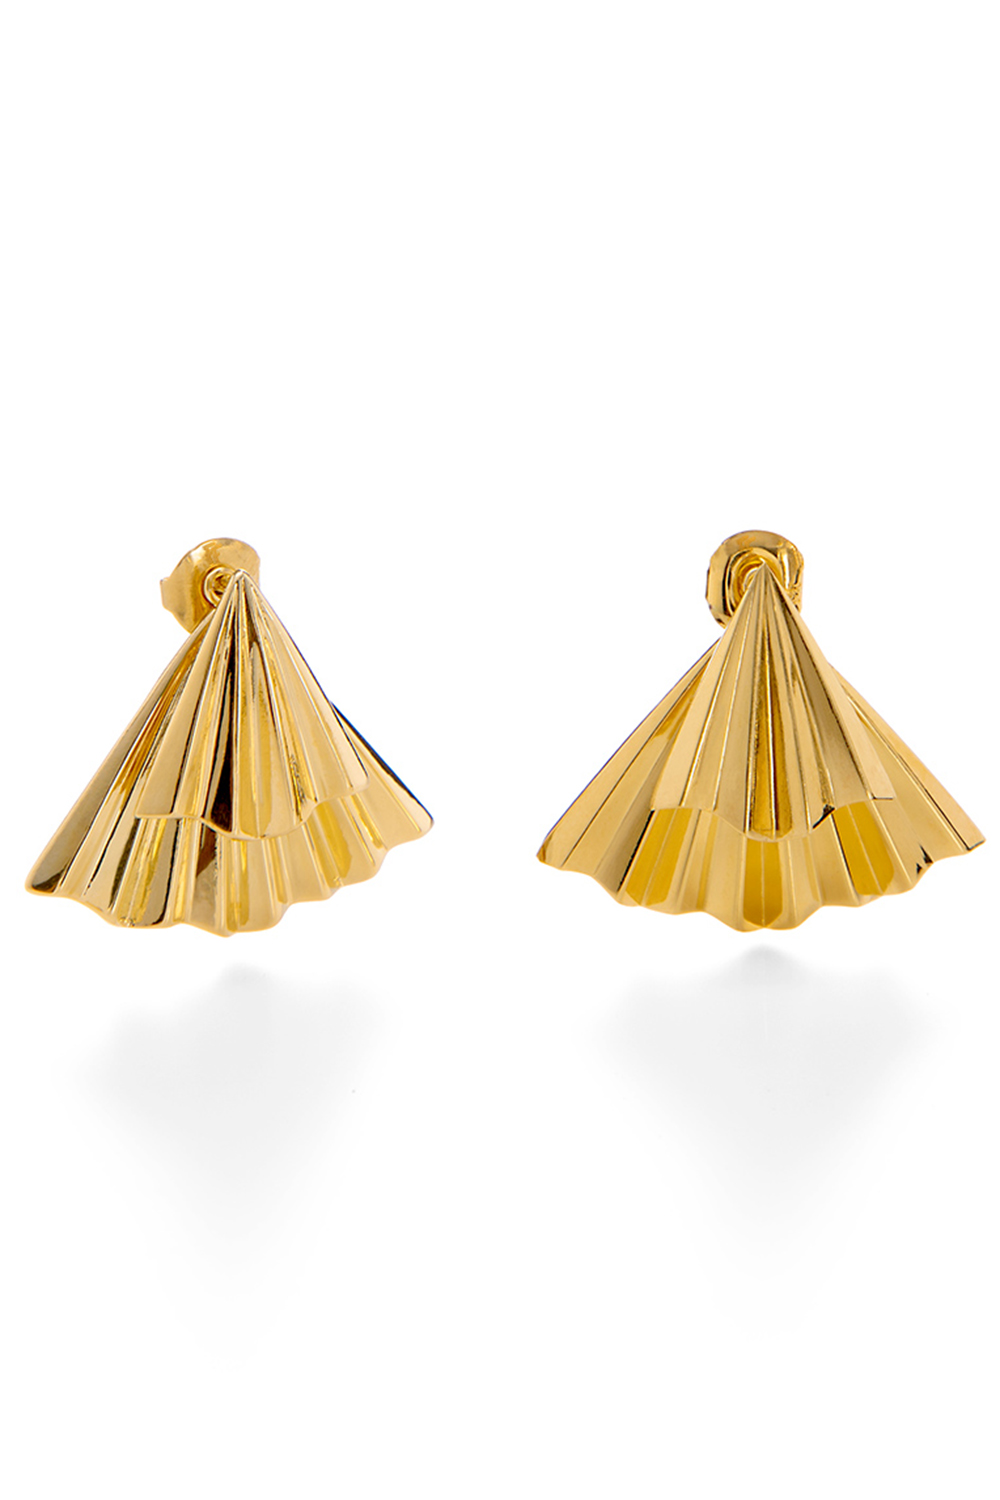 FOLLI FOLLIE – Γυναικεία καρφωτά σκουλαρίκια από ορείχαλκο FOLLI FOLLIE PLEATS BLISS χρυσά 1E20D005Y